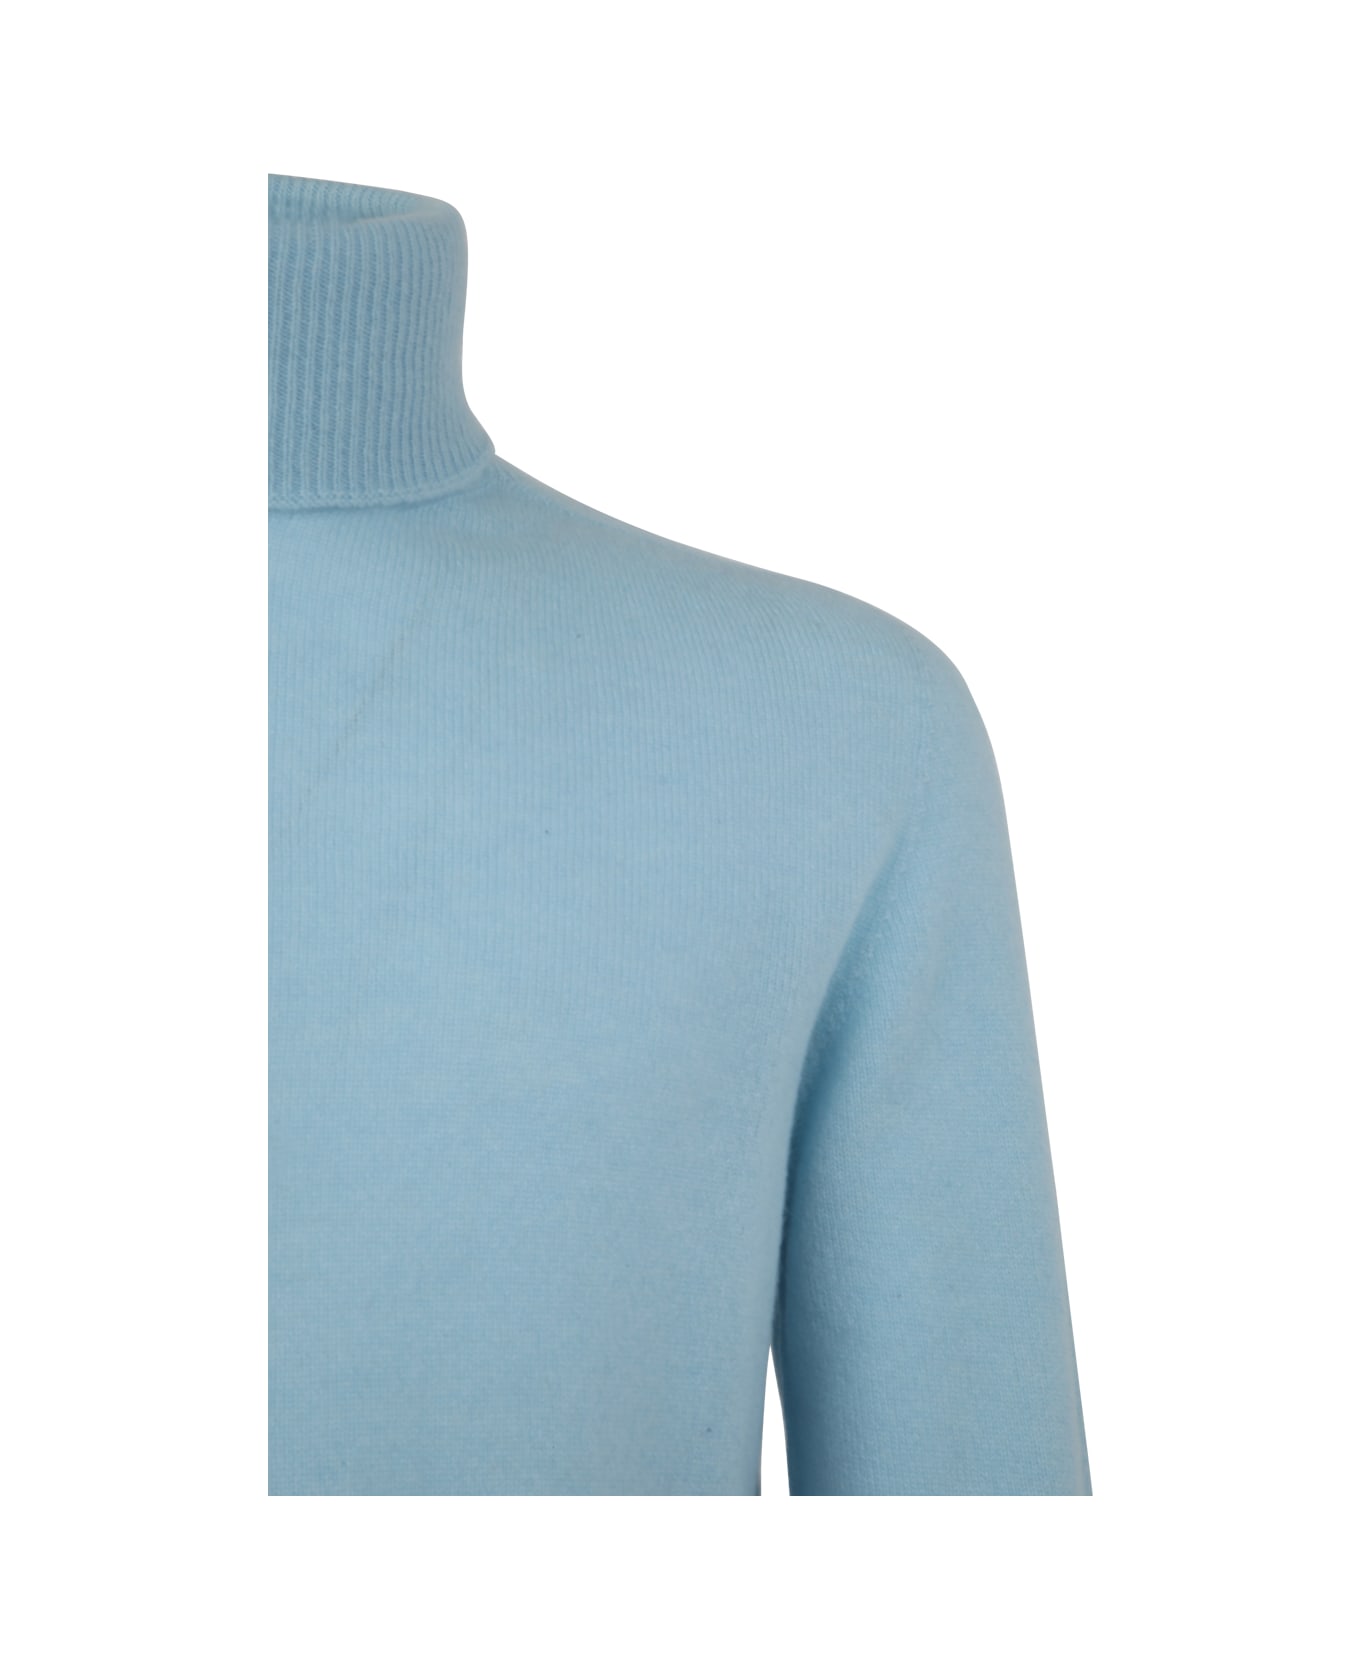 MD75 Cashmere Turtle Neck Sweater - Light Blue ニットウェア